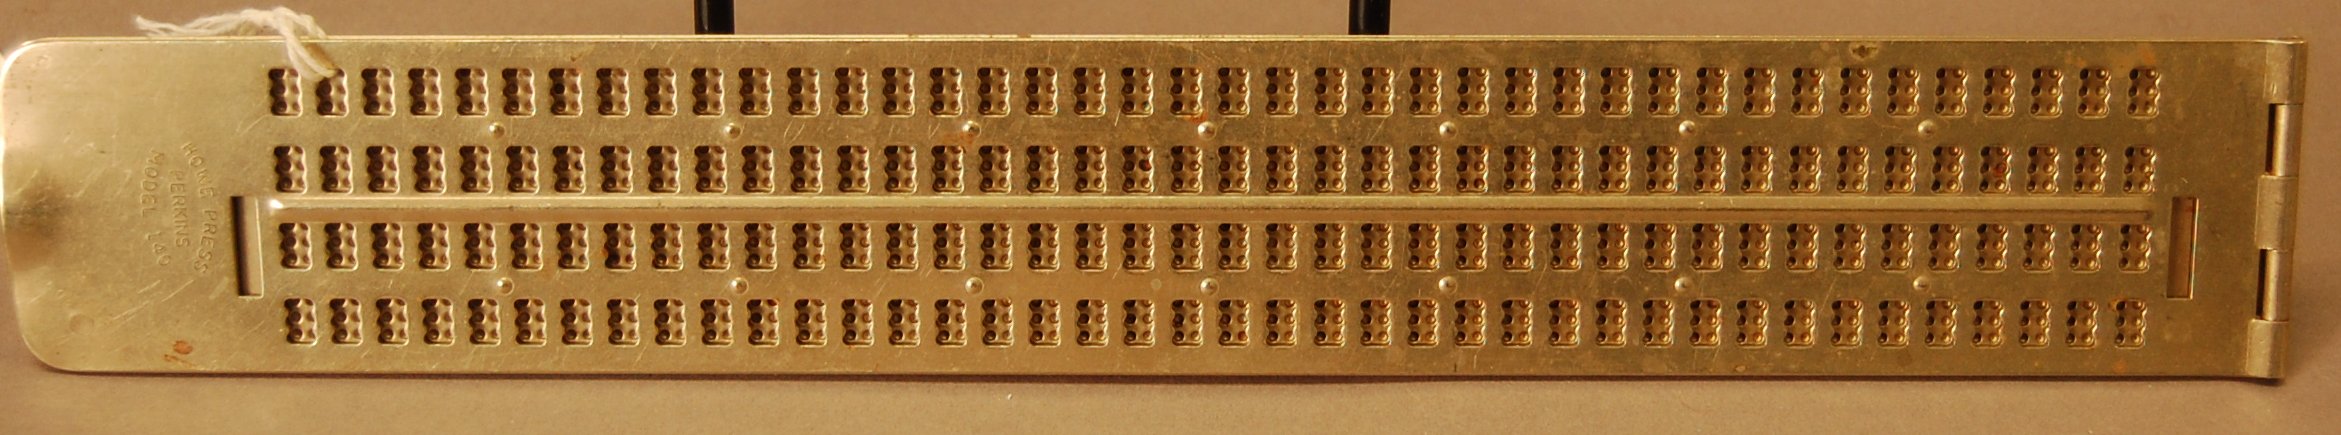 Braille slate-1